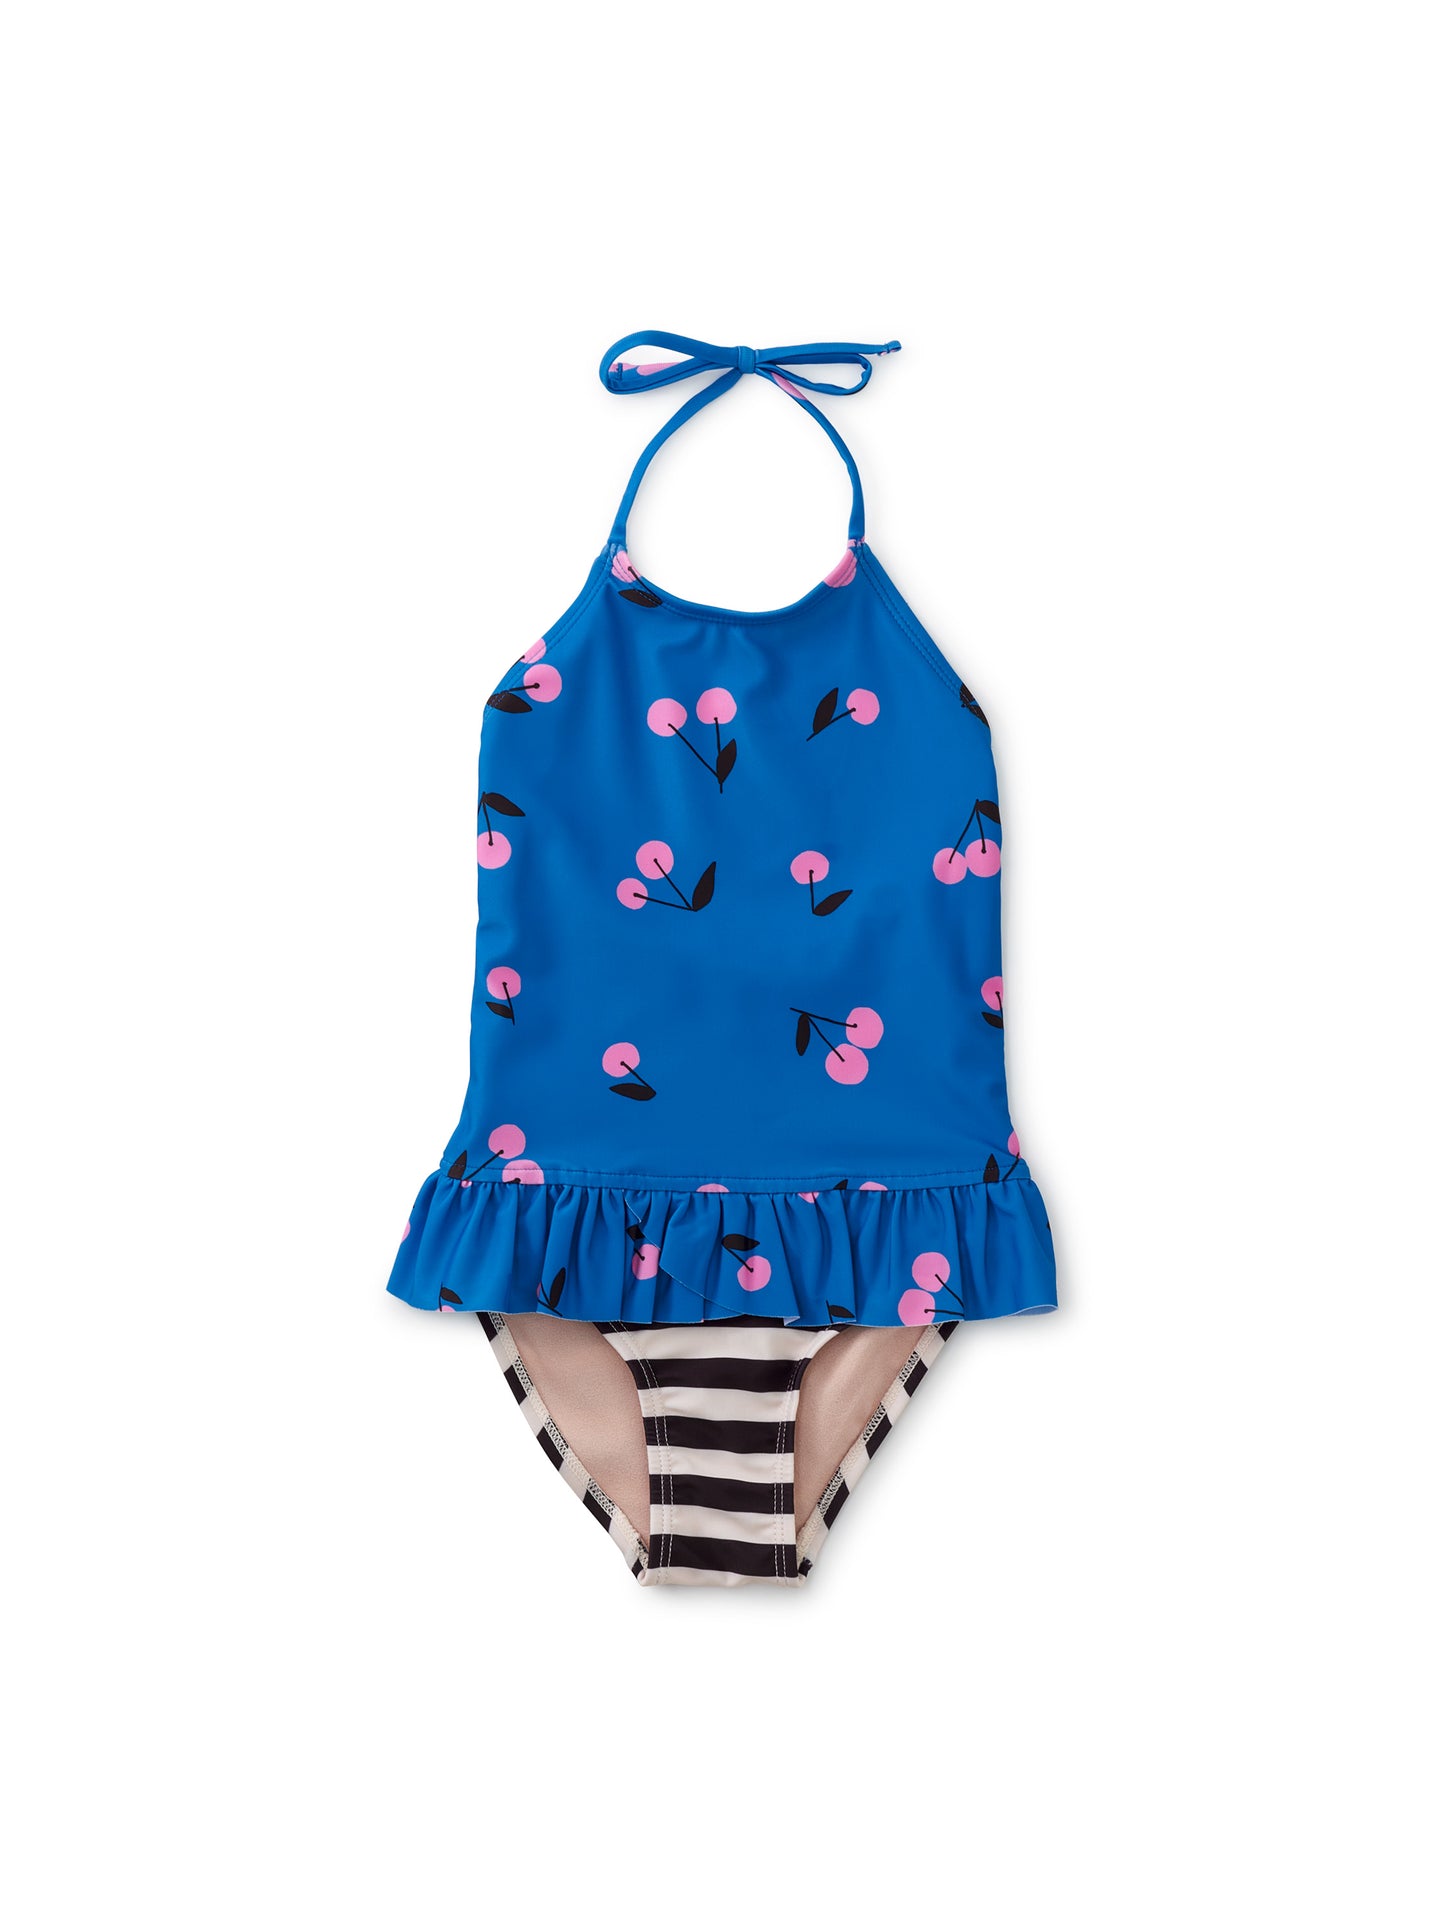 Tossed Cherries in Blue Peplum One-Piece Swimsuit